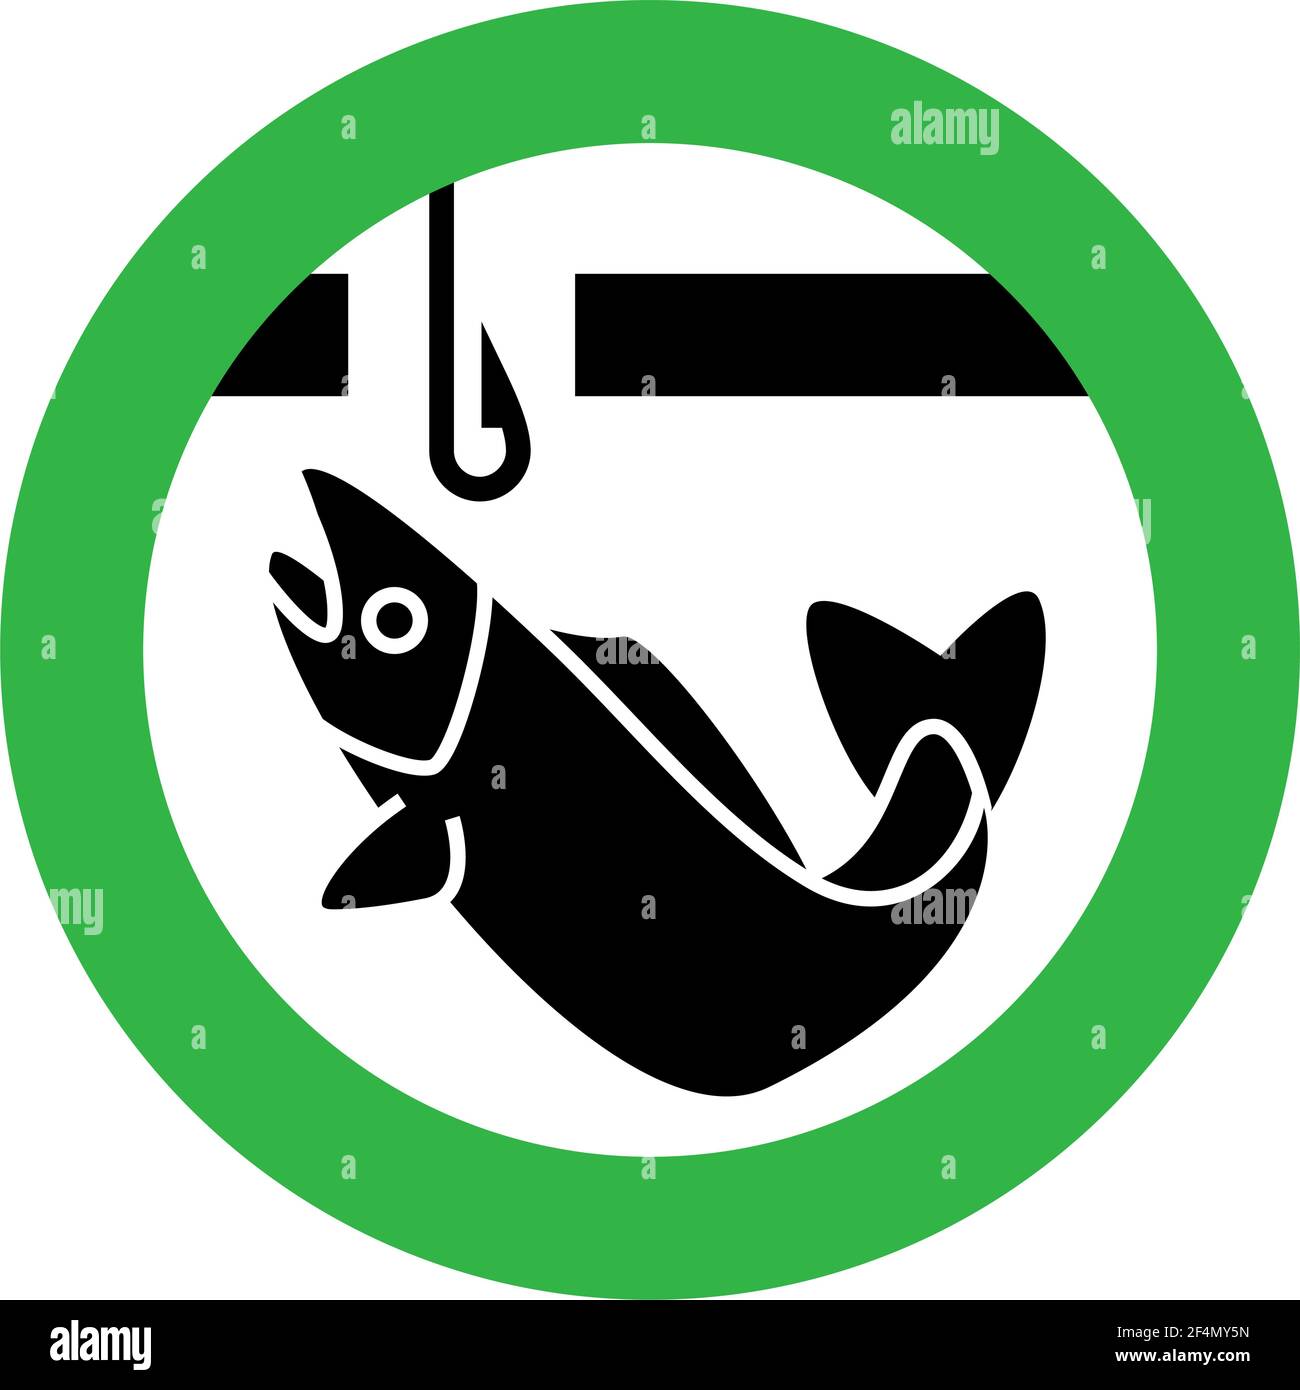 https://c8.alamy.com/comp/2F4MY5N/ice-fishing-allowed-sign-modern-round-sticker-2F4MY5N.jpg